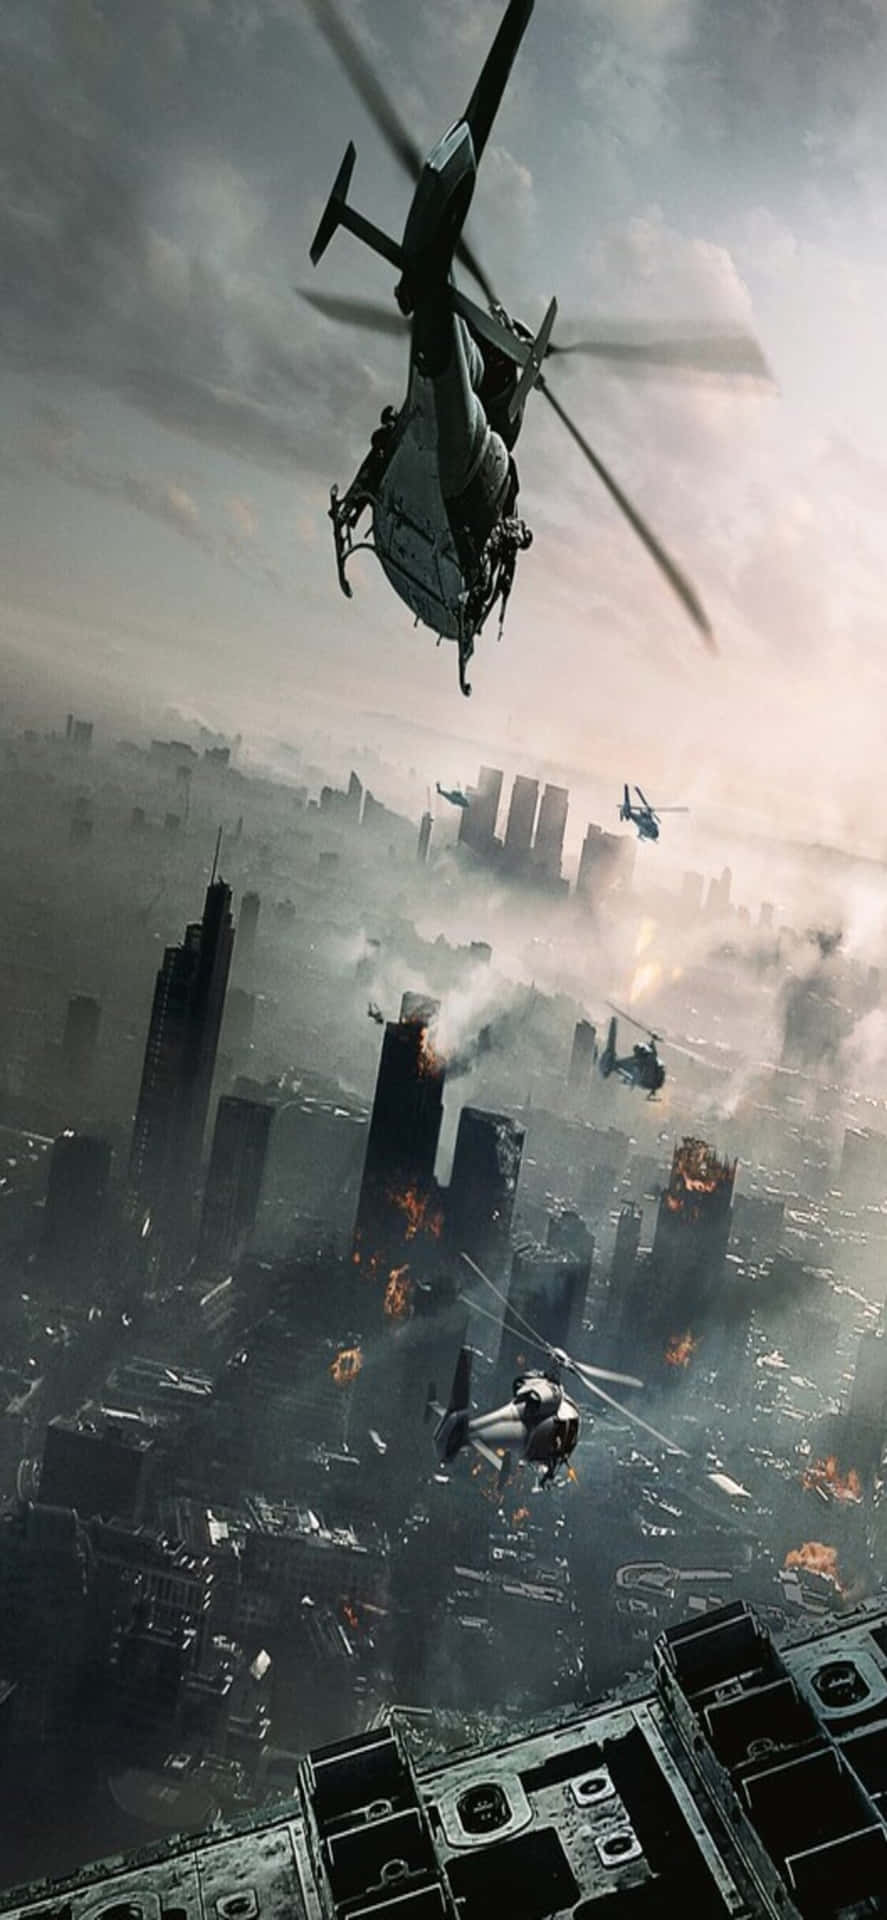 Helikopteröver Stad Iphone Xs Max World War Z-bakgrund